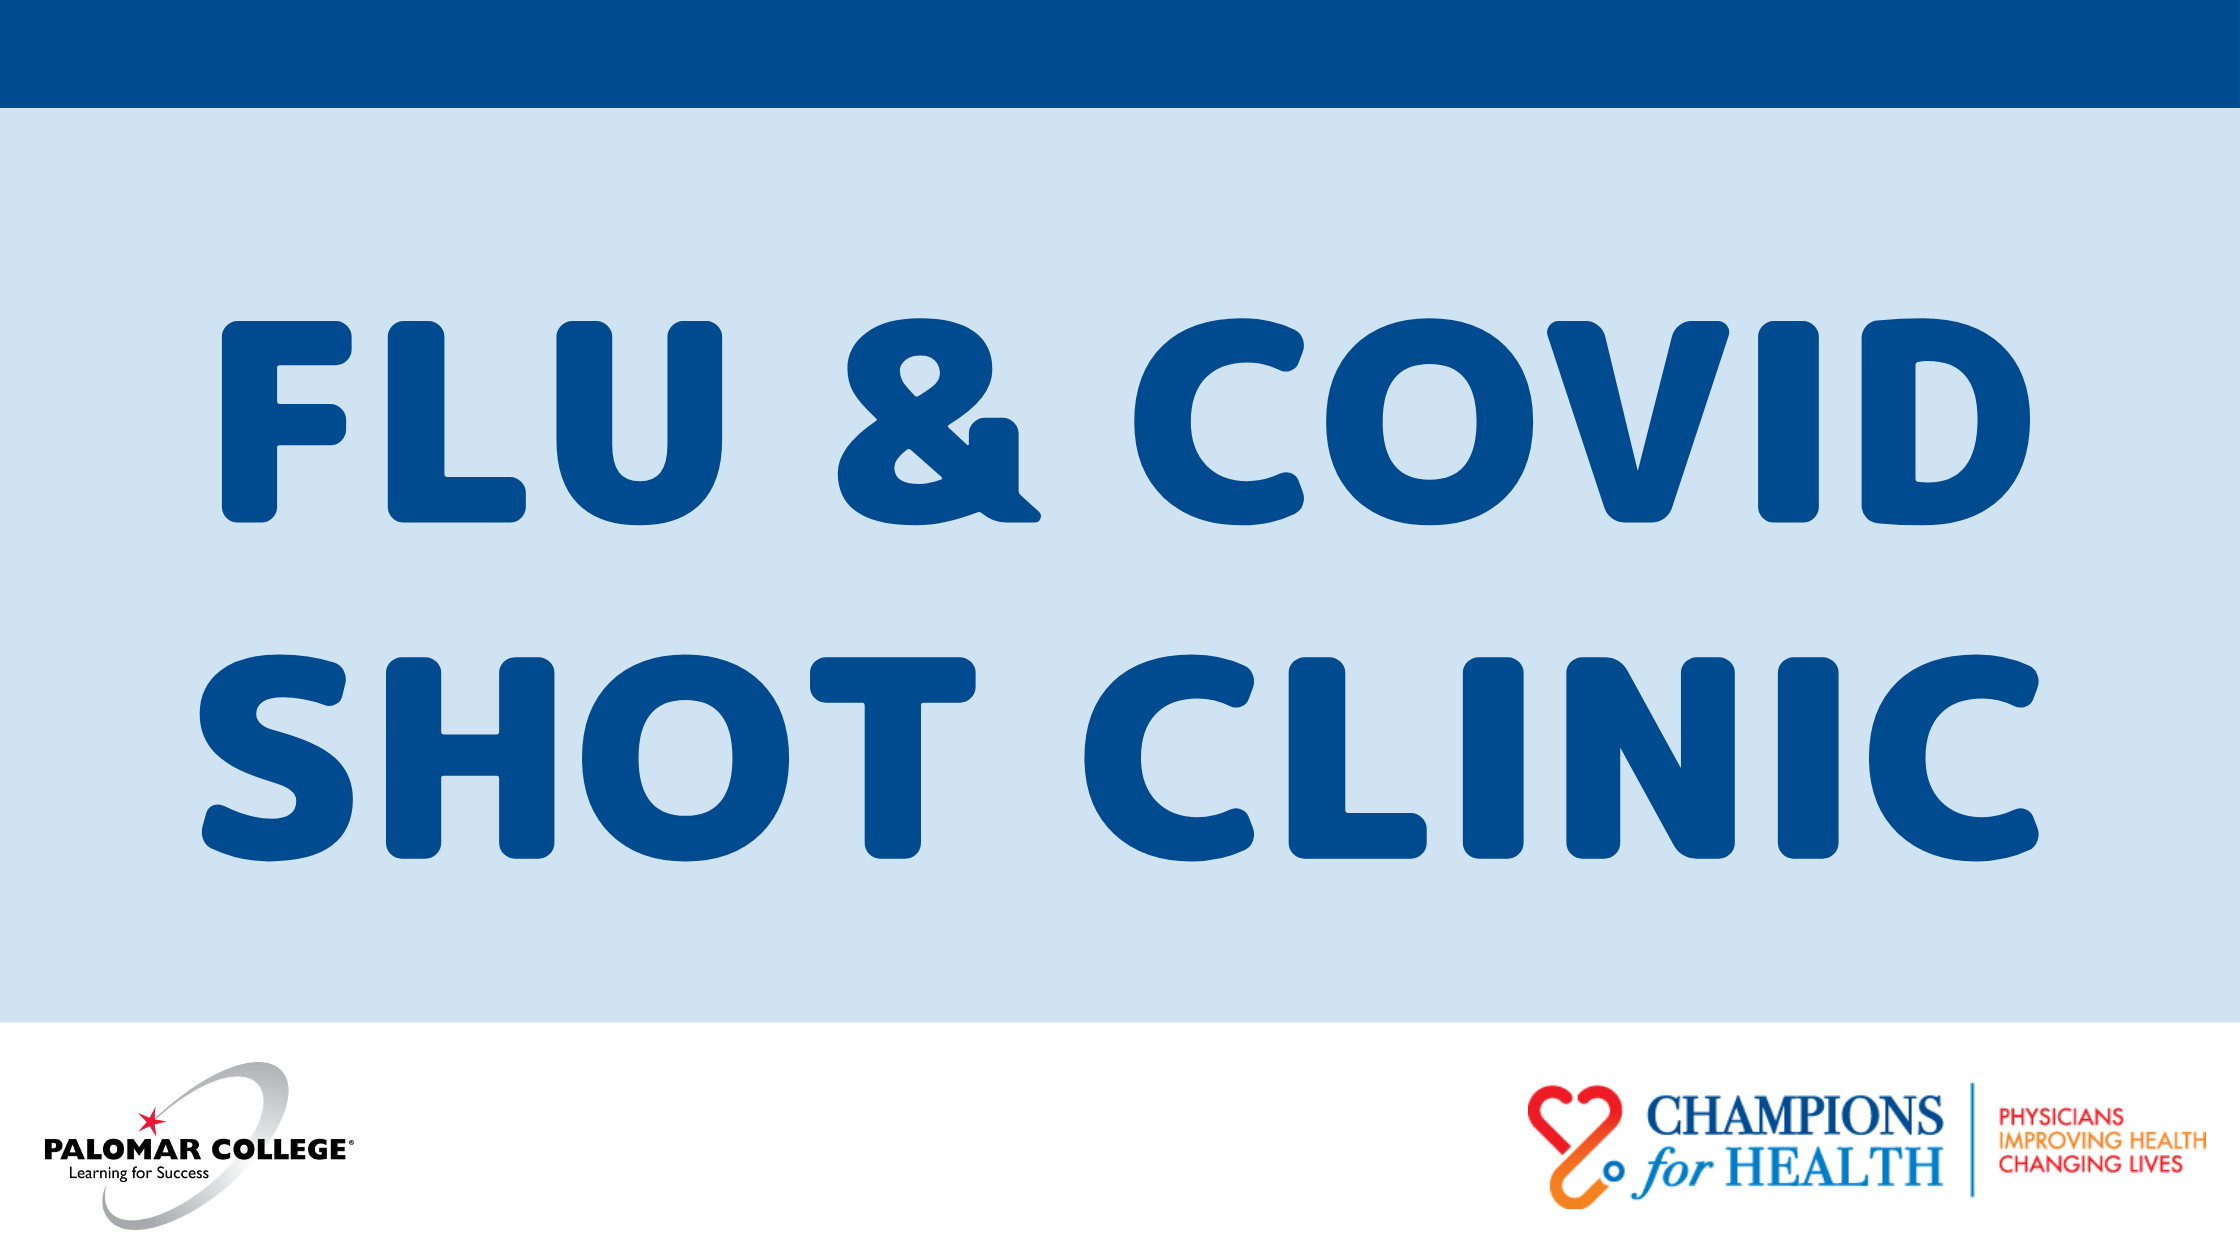 Flu & Covid Shot Clinic